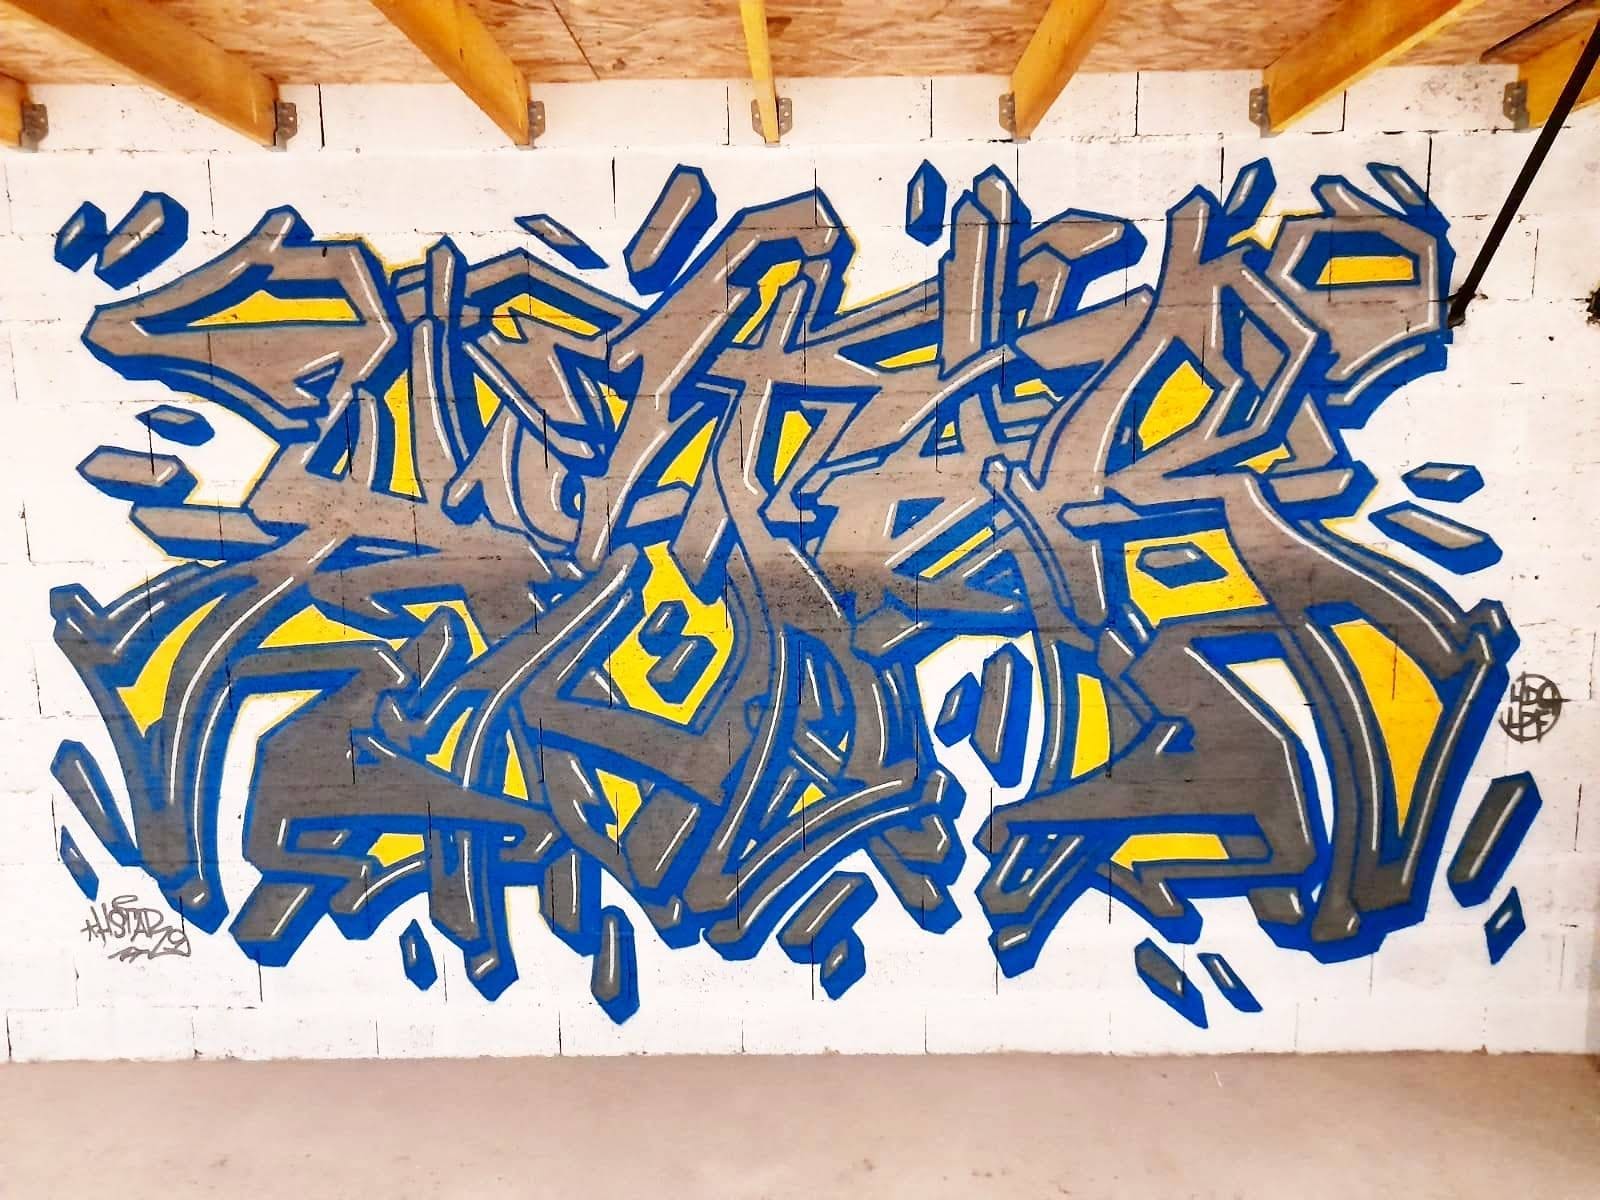 Wall-Graffiti-9